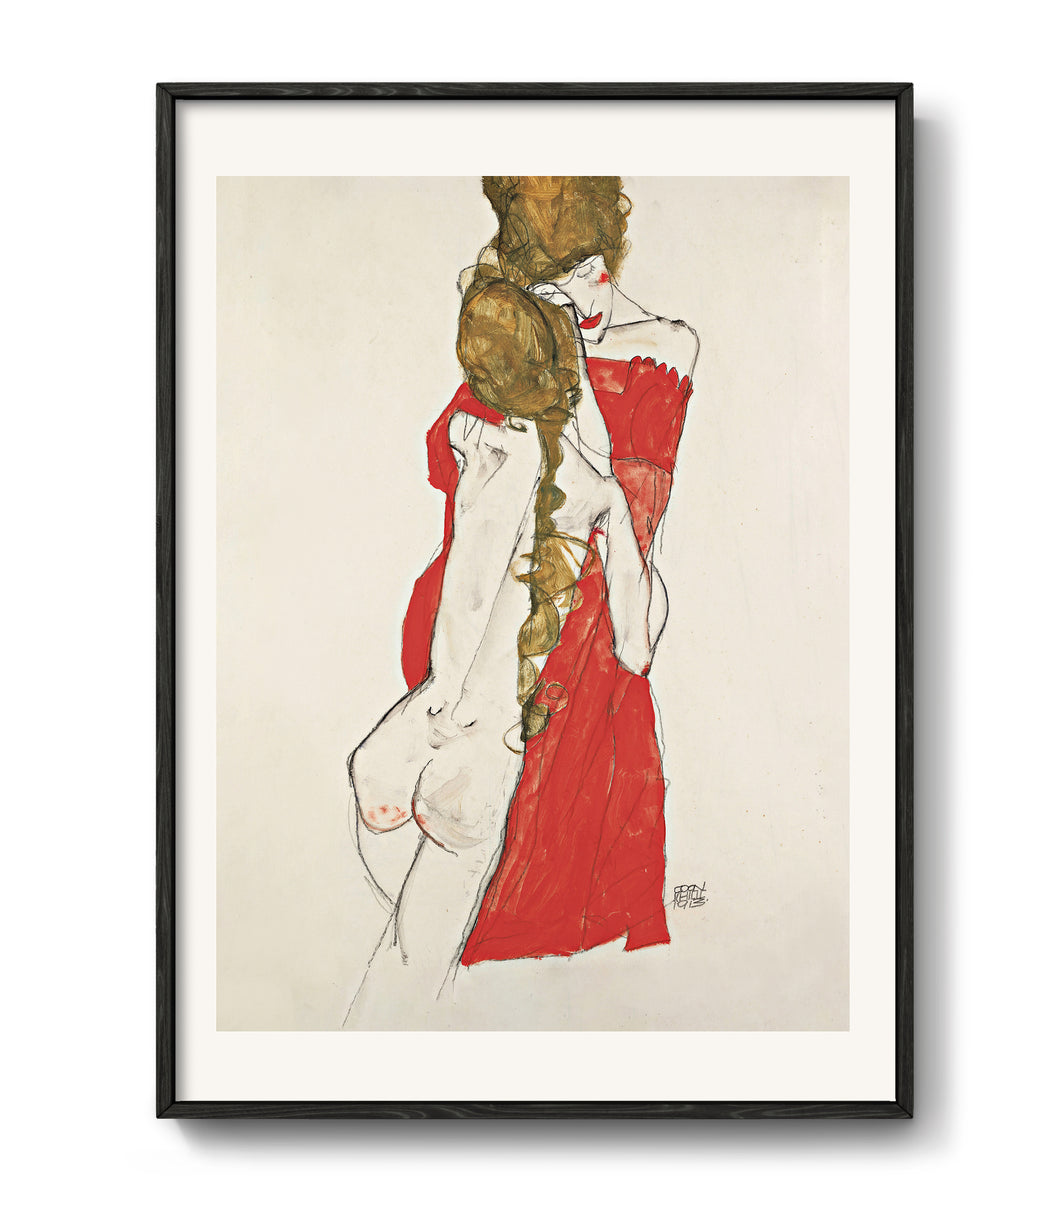 Two women embracing by Egon Schiele